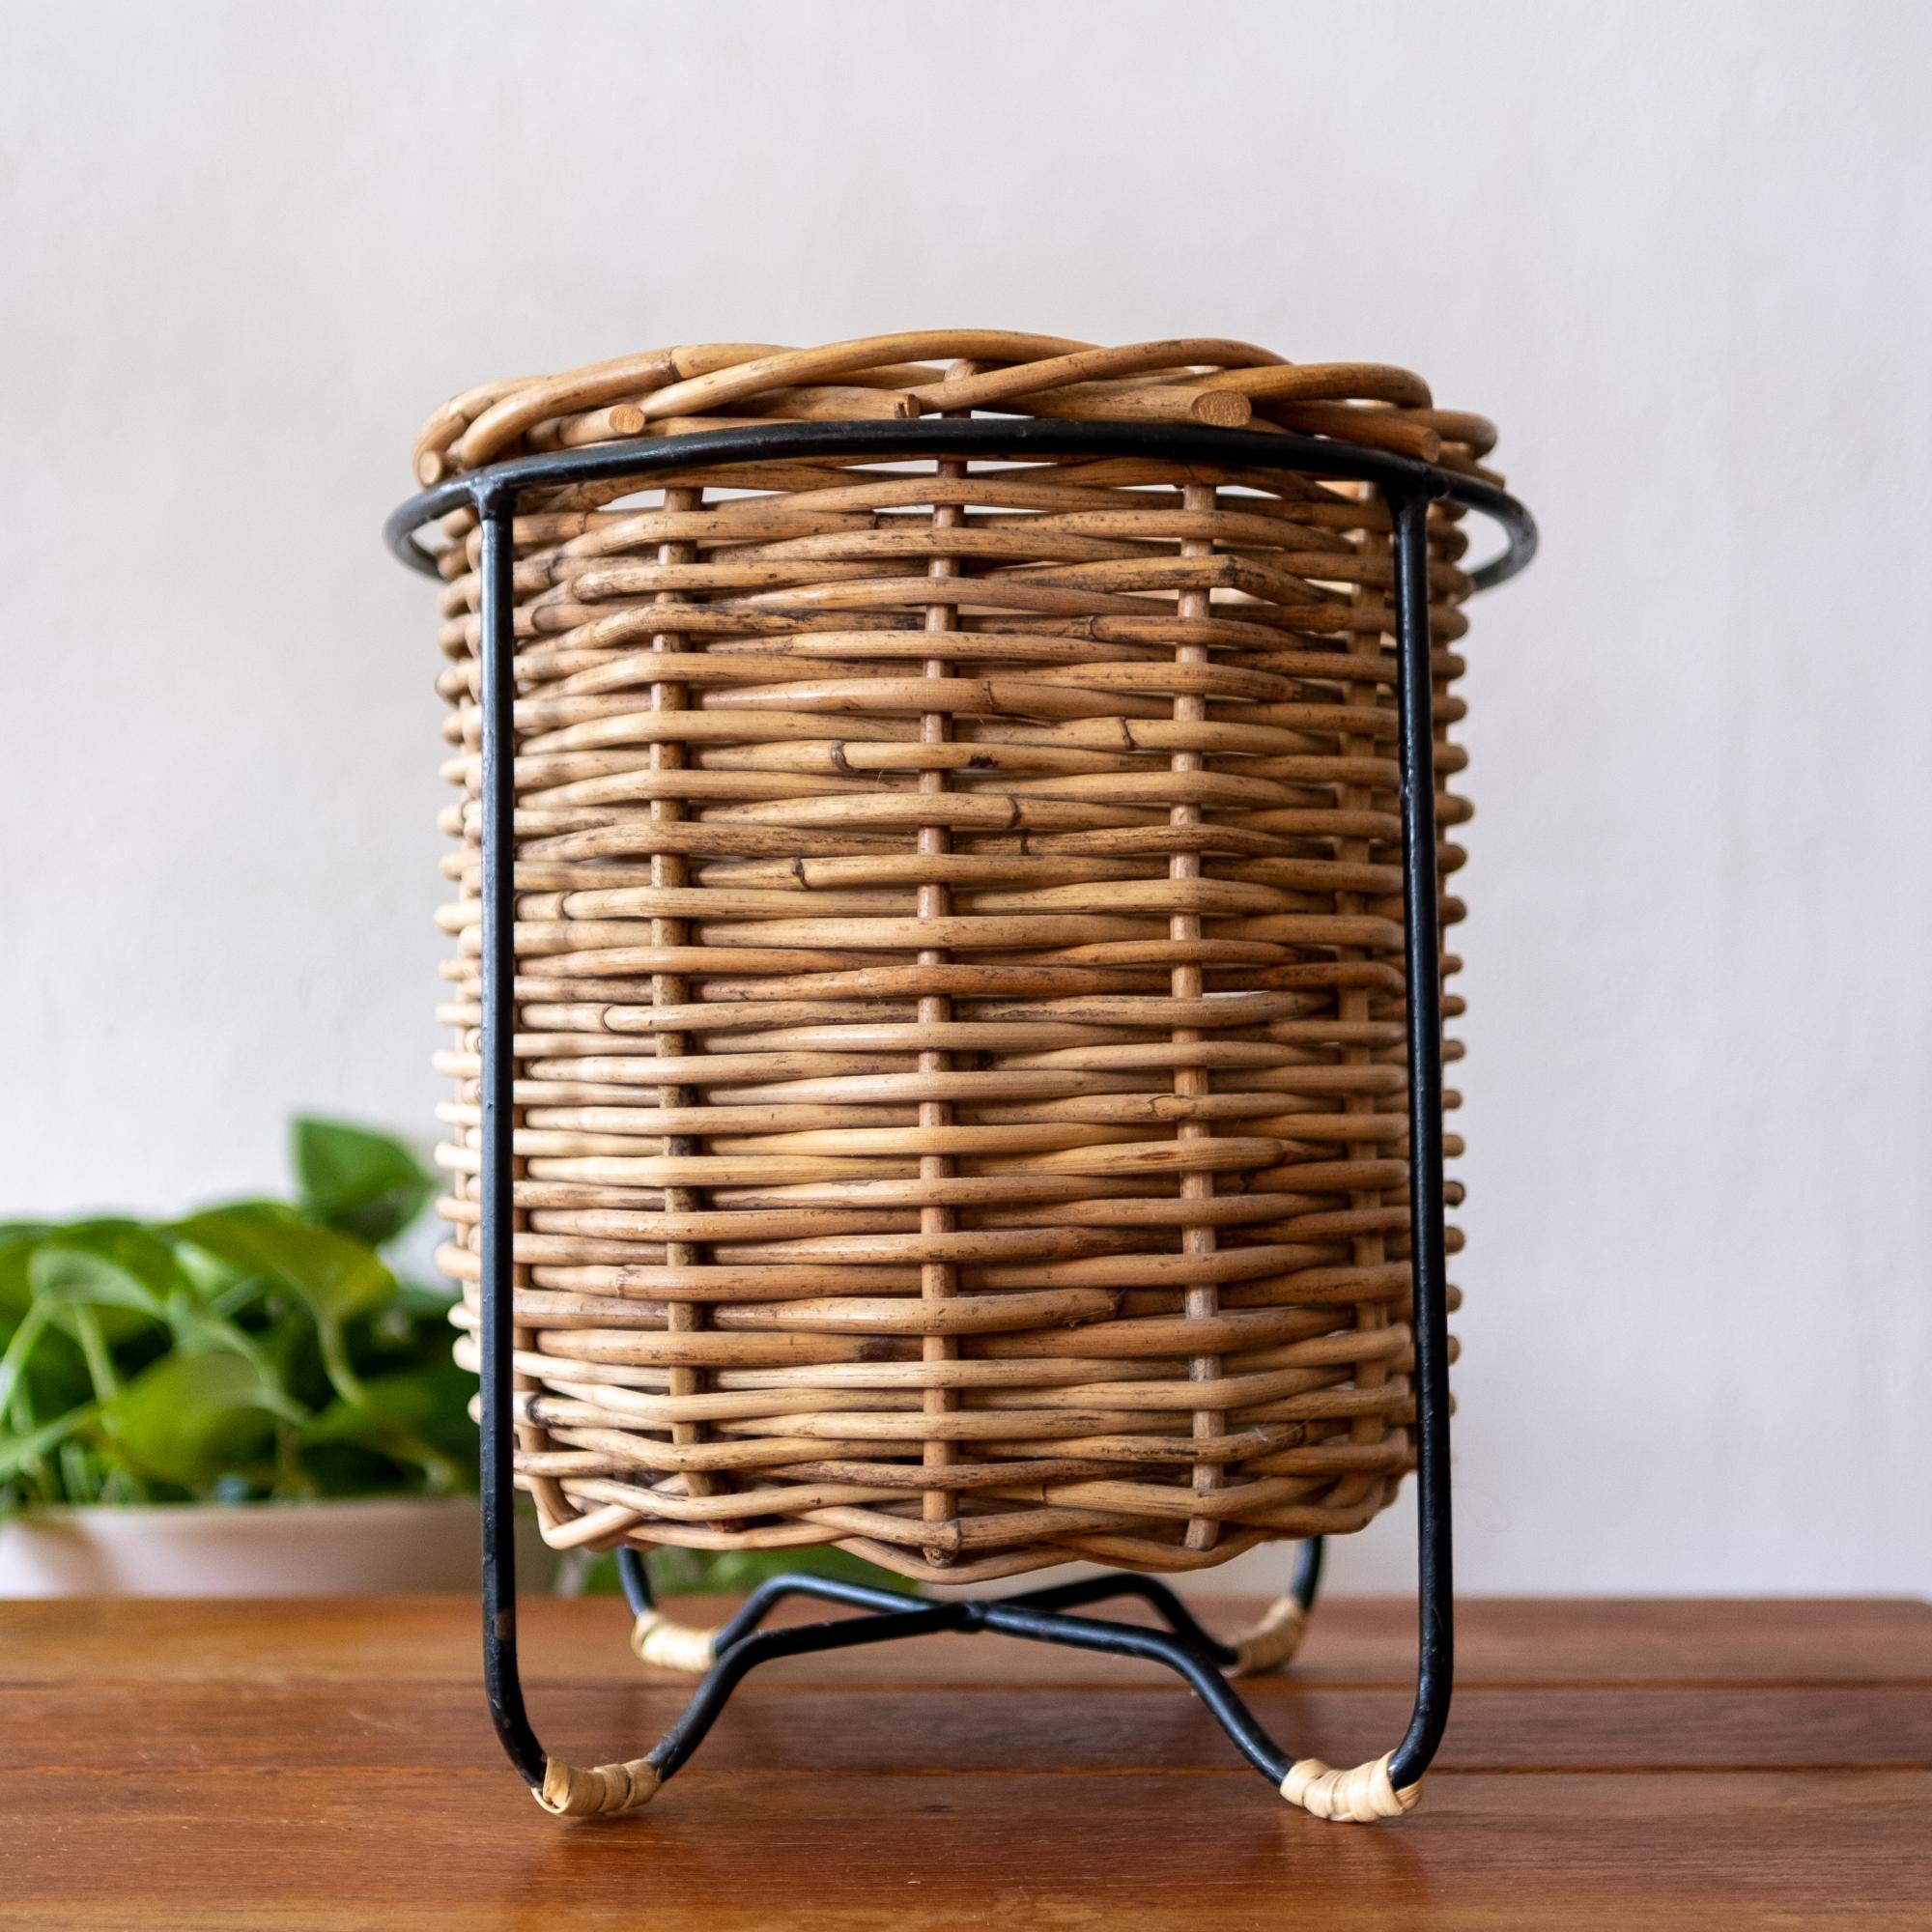 cane waste basket